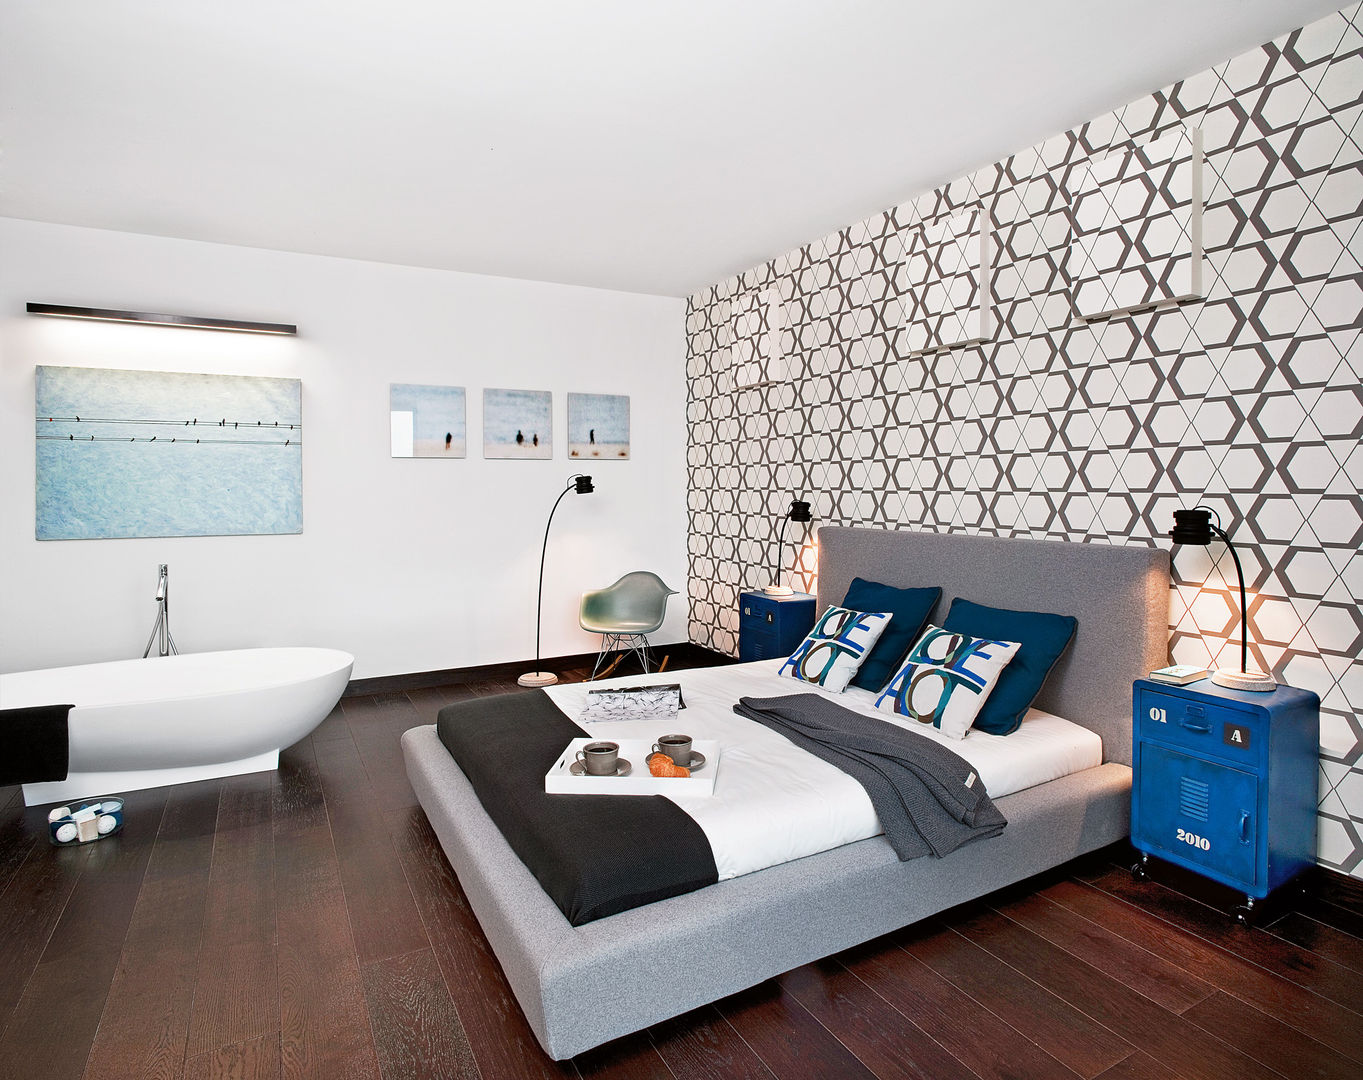 Industrialny Loft , justyna smolec architektura & design justyna smolec architektura & design Modern style bedroom